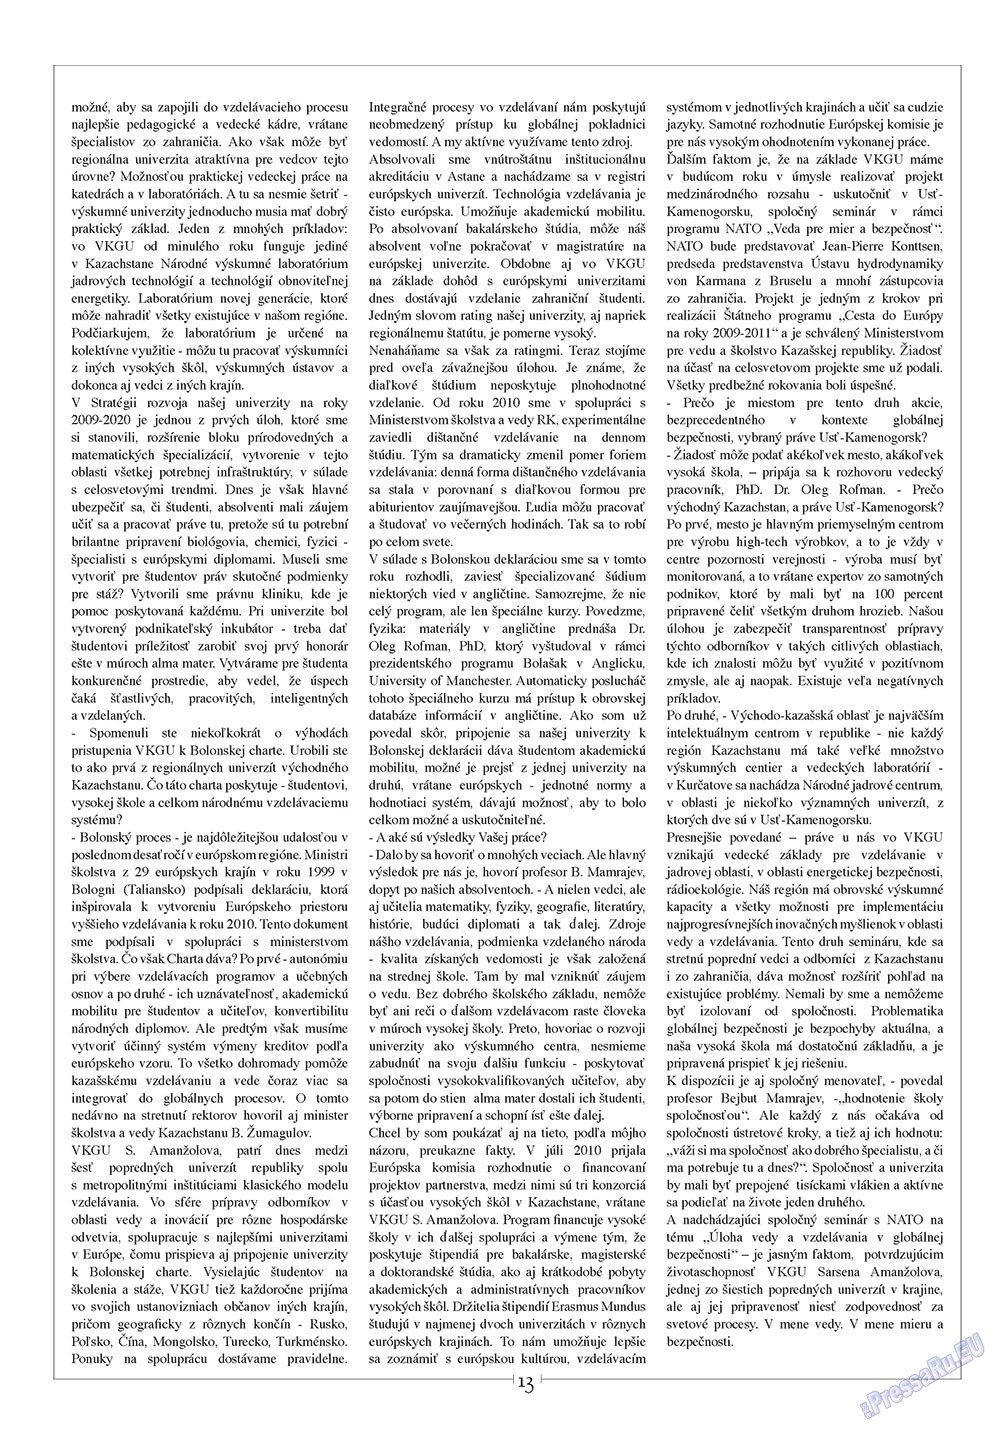 Европейский меридиан, журнал. 2010 №4 стр.13